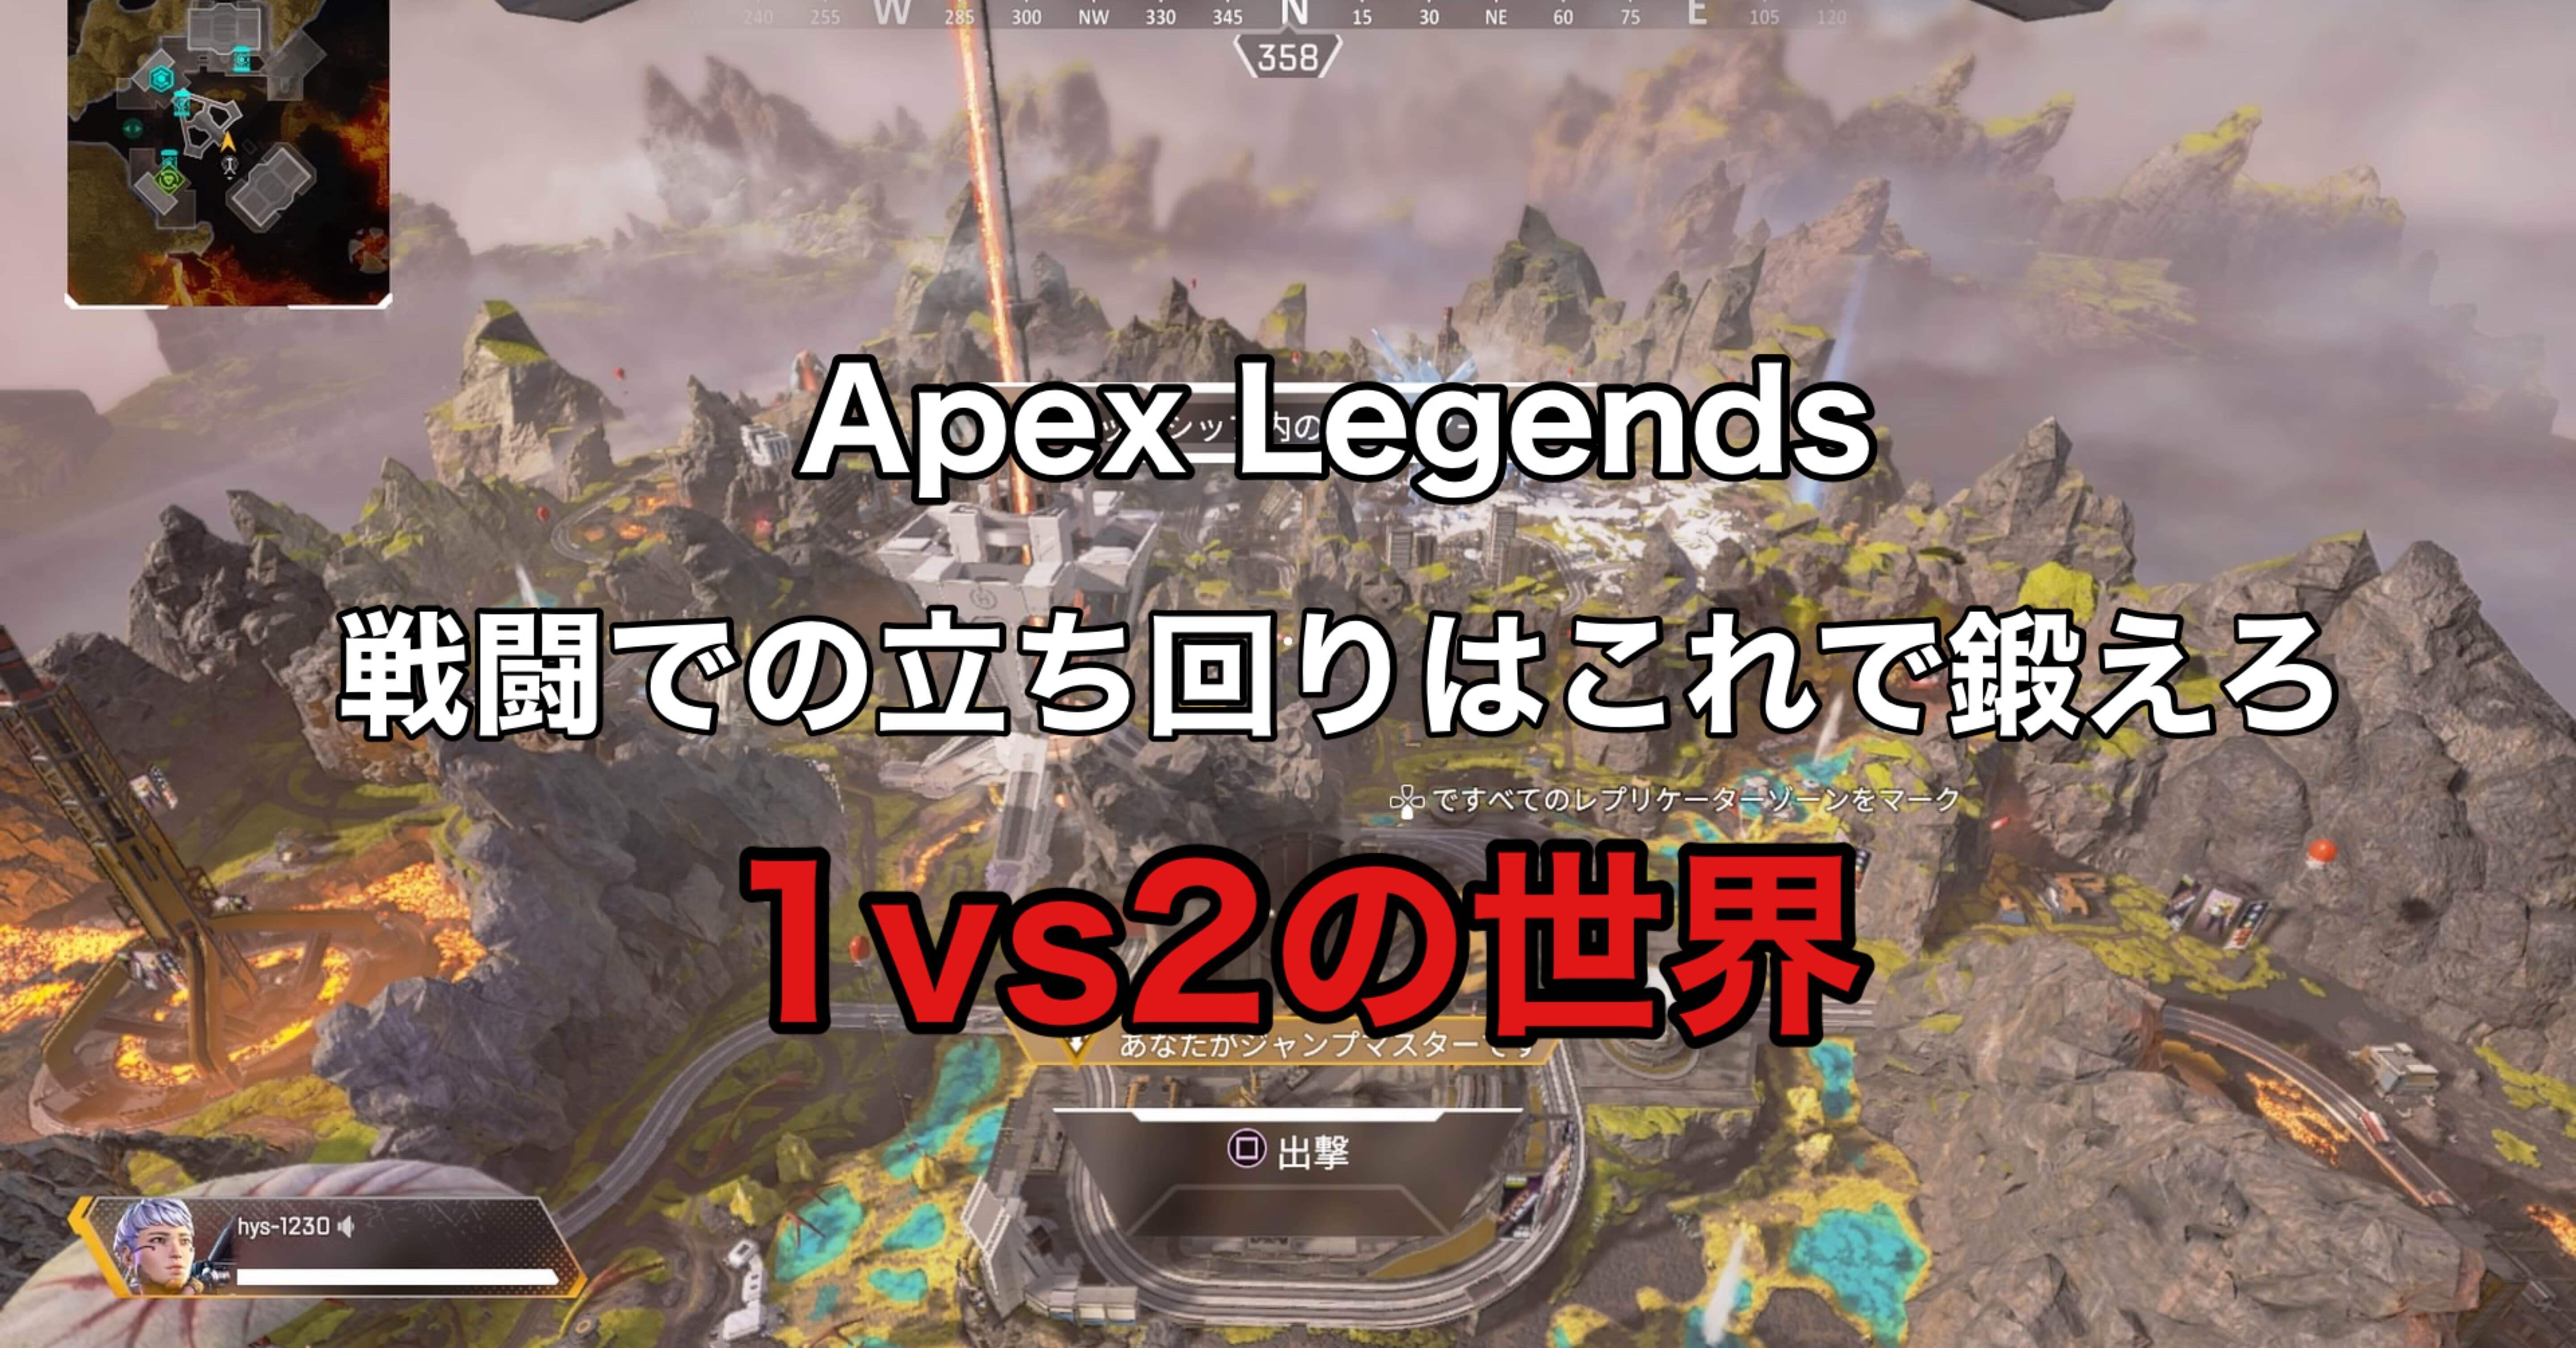 Apex Legends 戦闘での立ち回りはこれで学べ 1vs2の世界 Hys ひす 毎日ゲームnote Note